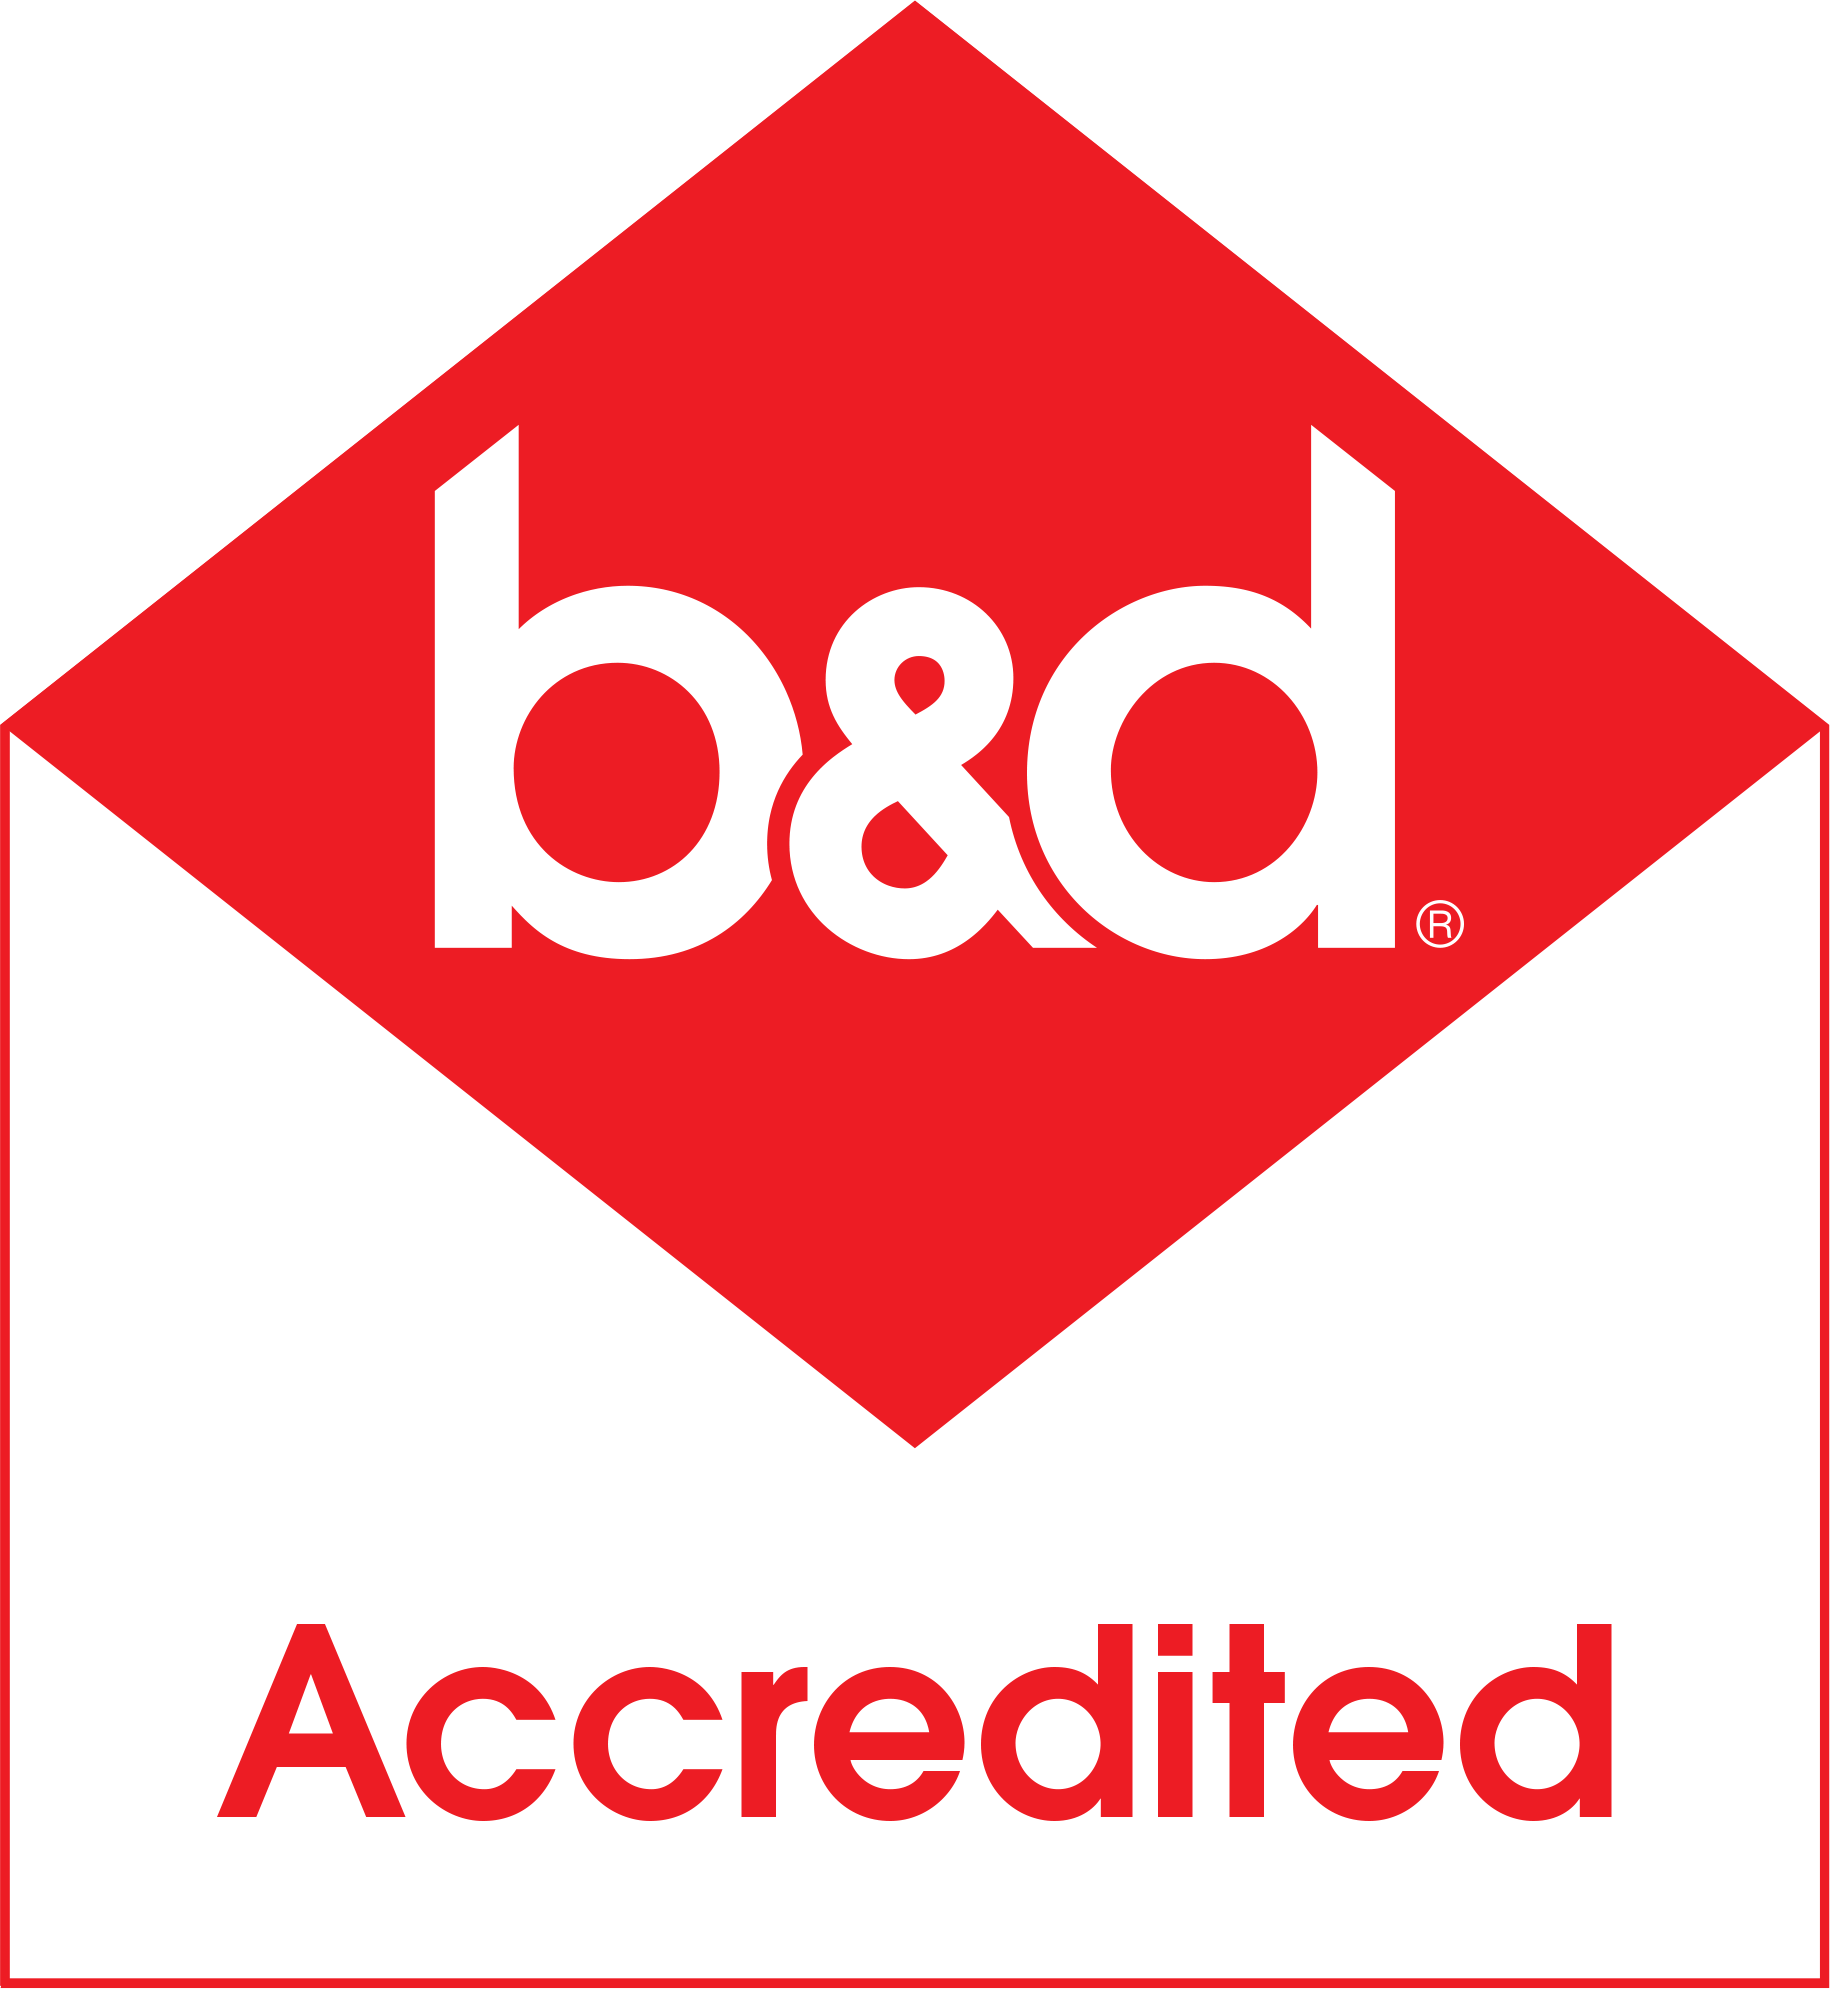 b&d accredited logo